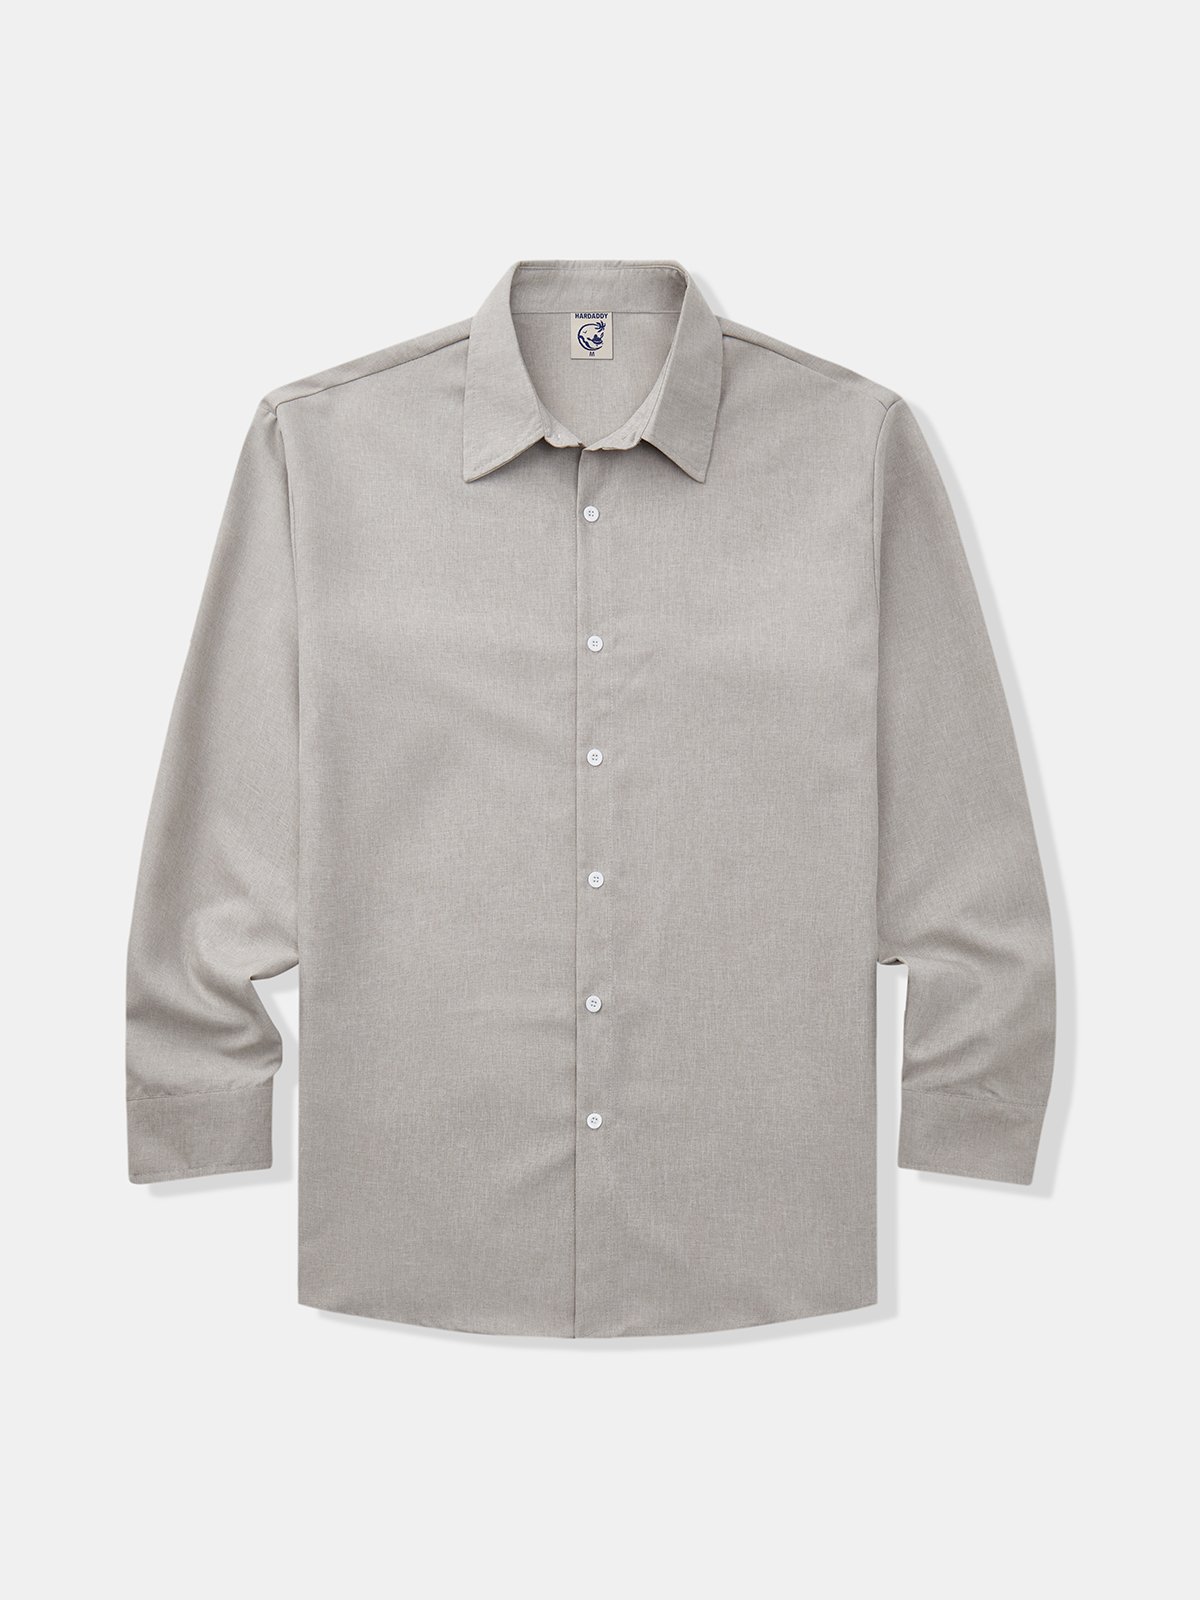 Hardaddy Plain Long Sleeve Casual Shirt